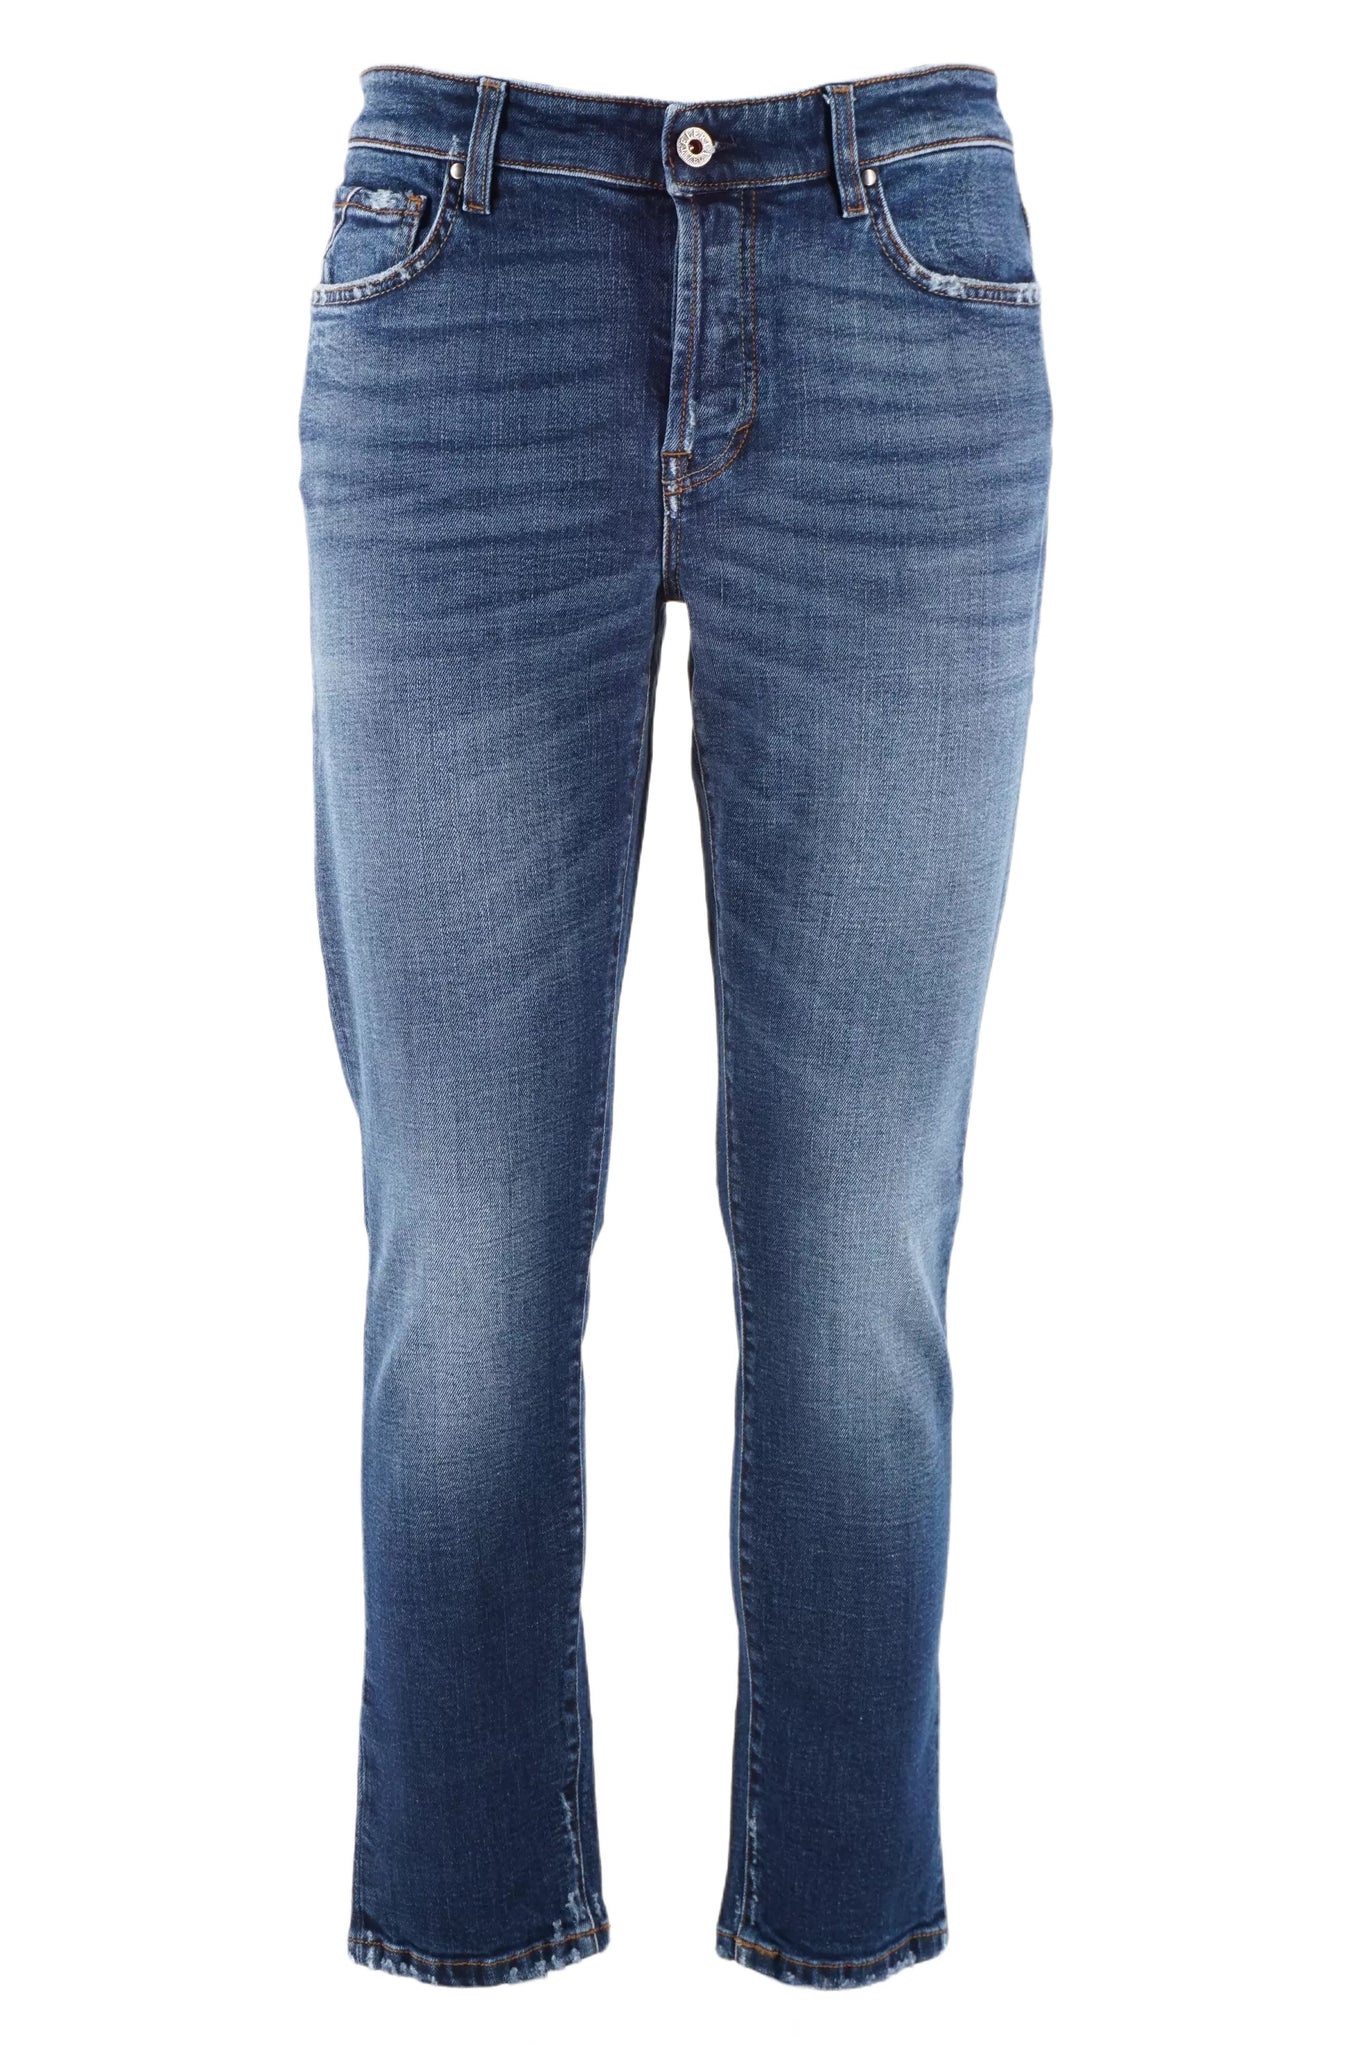 Jeans Slim Fit Teleria Zed / Jeans - Ideal Moda